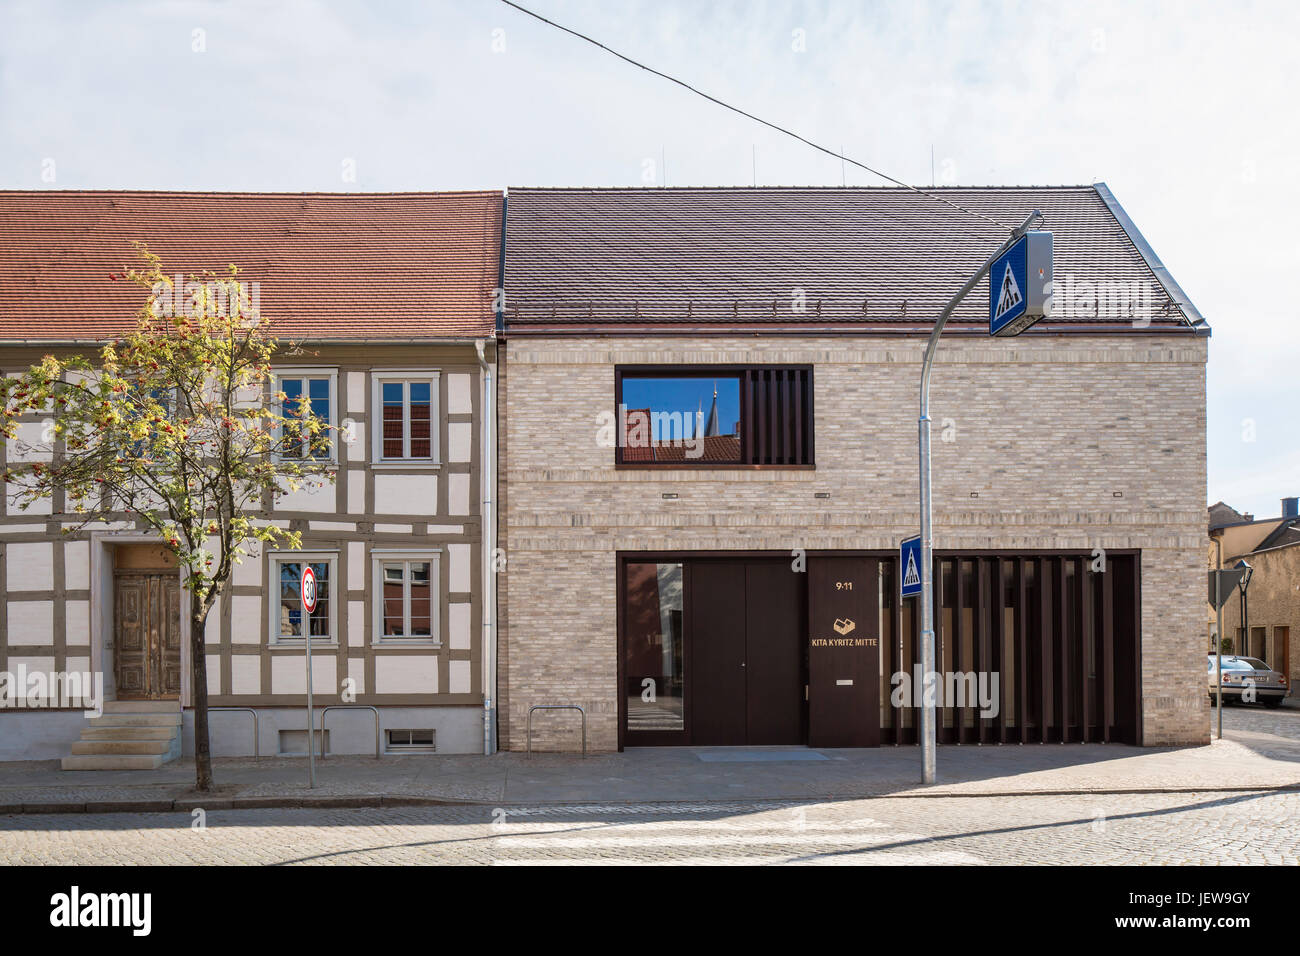 Juxtaposition of old and new. Kindergarten Mitte Kyritz, Kyritz, Germany. Architect: kleyer koblitz letzel freivogel, 2016. Stock Photo